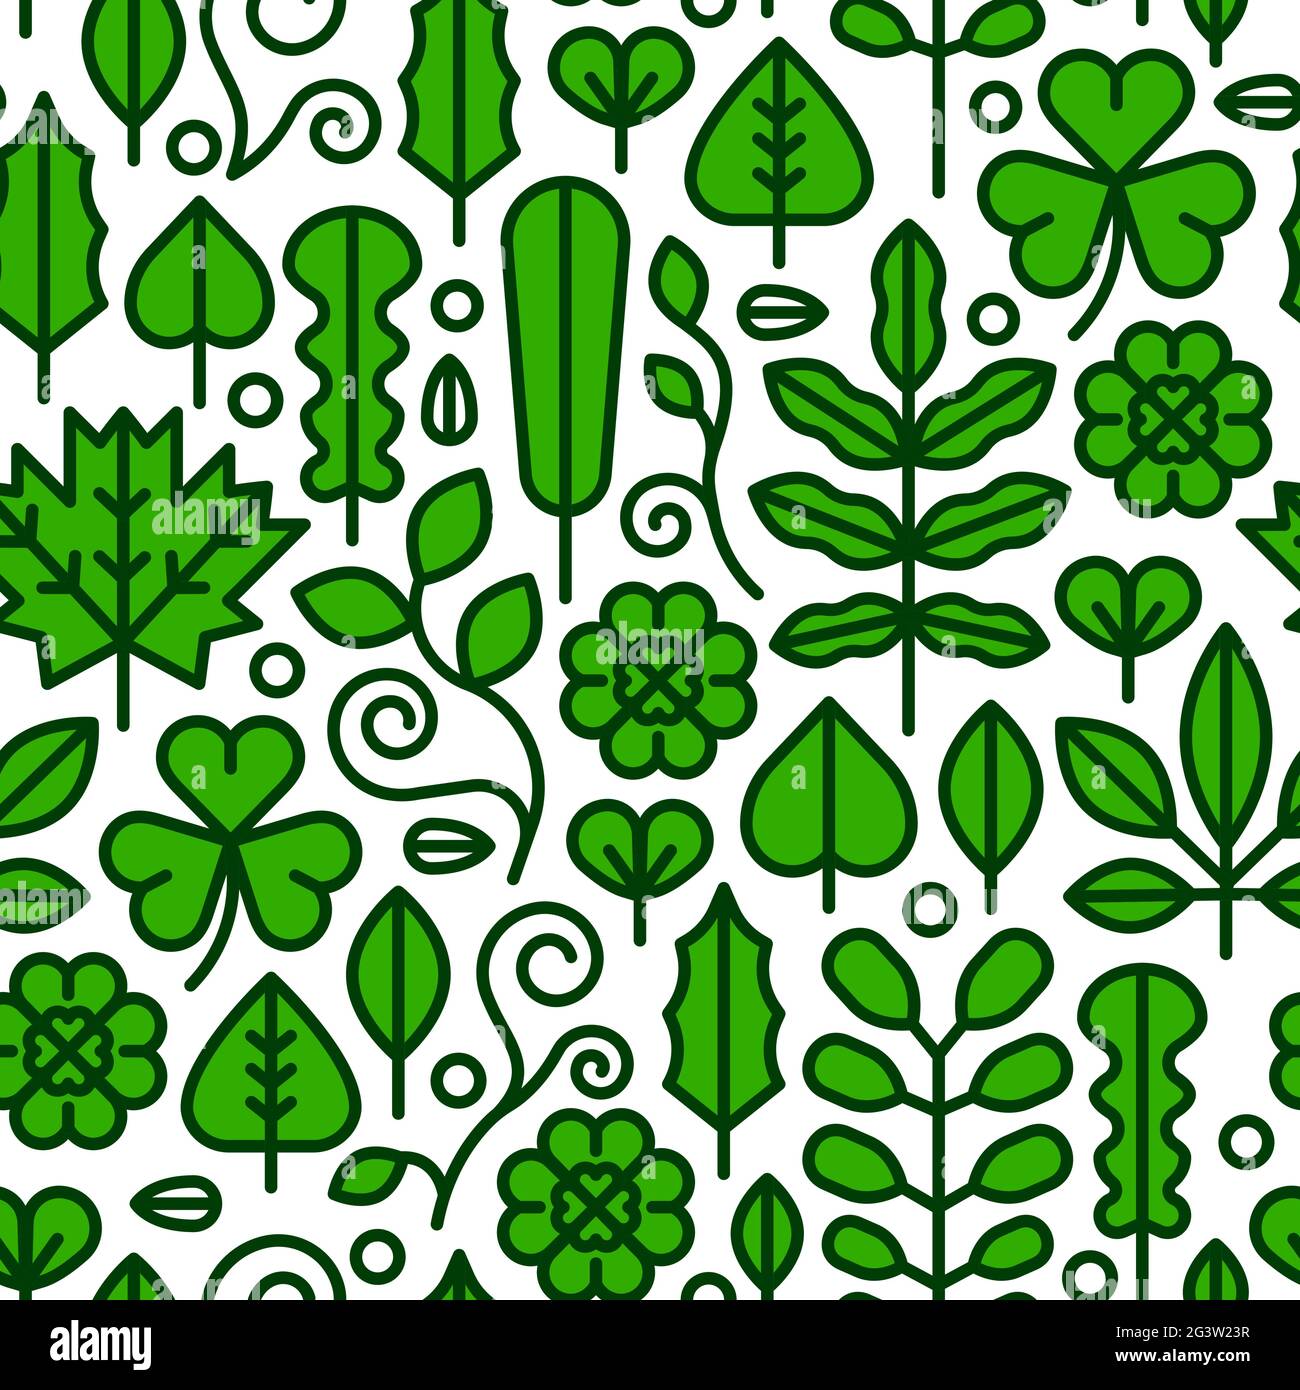 Green plant leaf flat line icon seamless pattern illustration. Modern nature decoration background for eco friendly design, vegetarian lifestyle or en Stock Vector